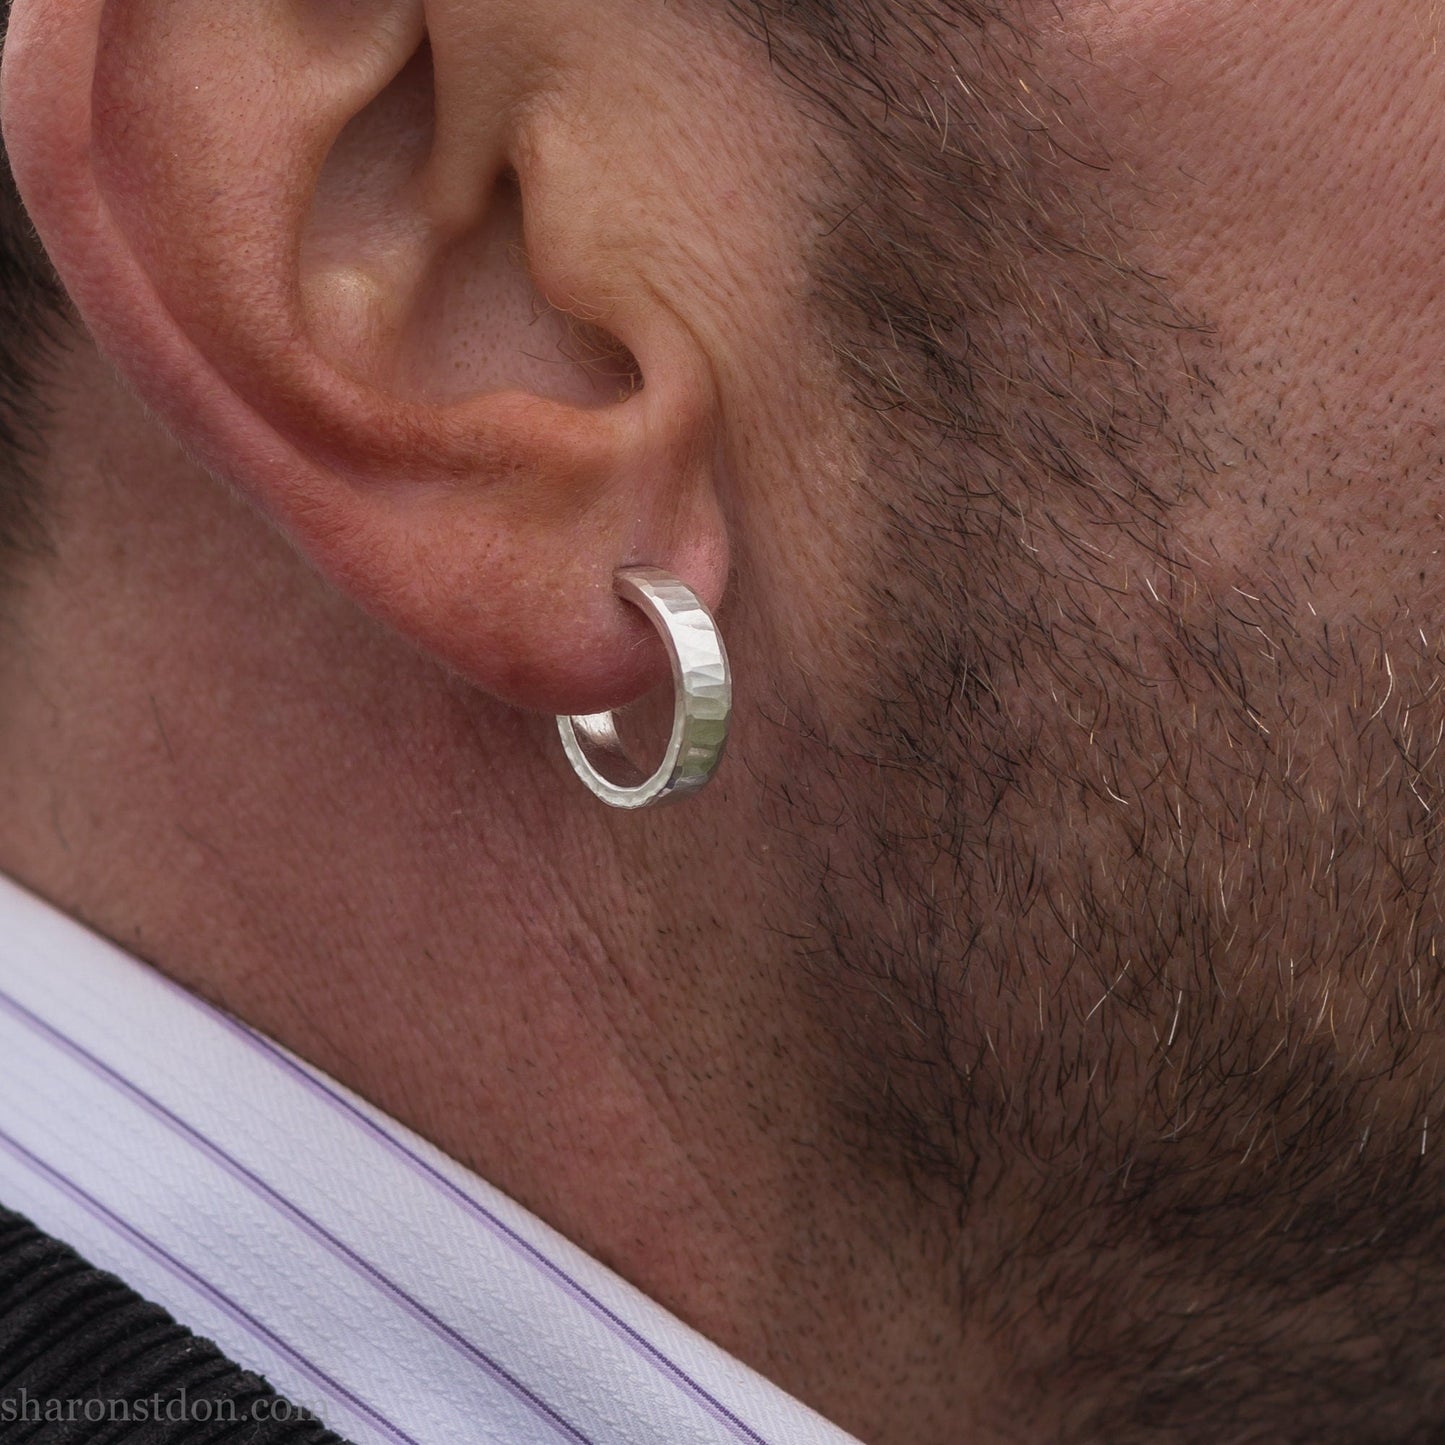 18 x 4mm small sterling silver hoop earrings.